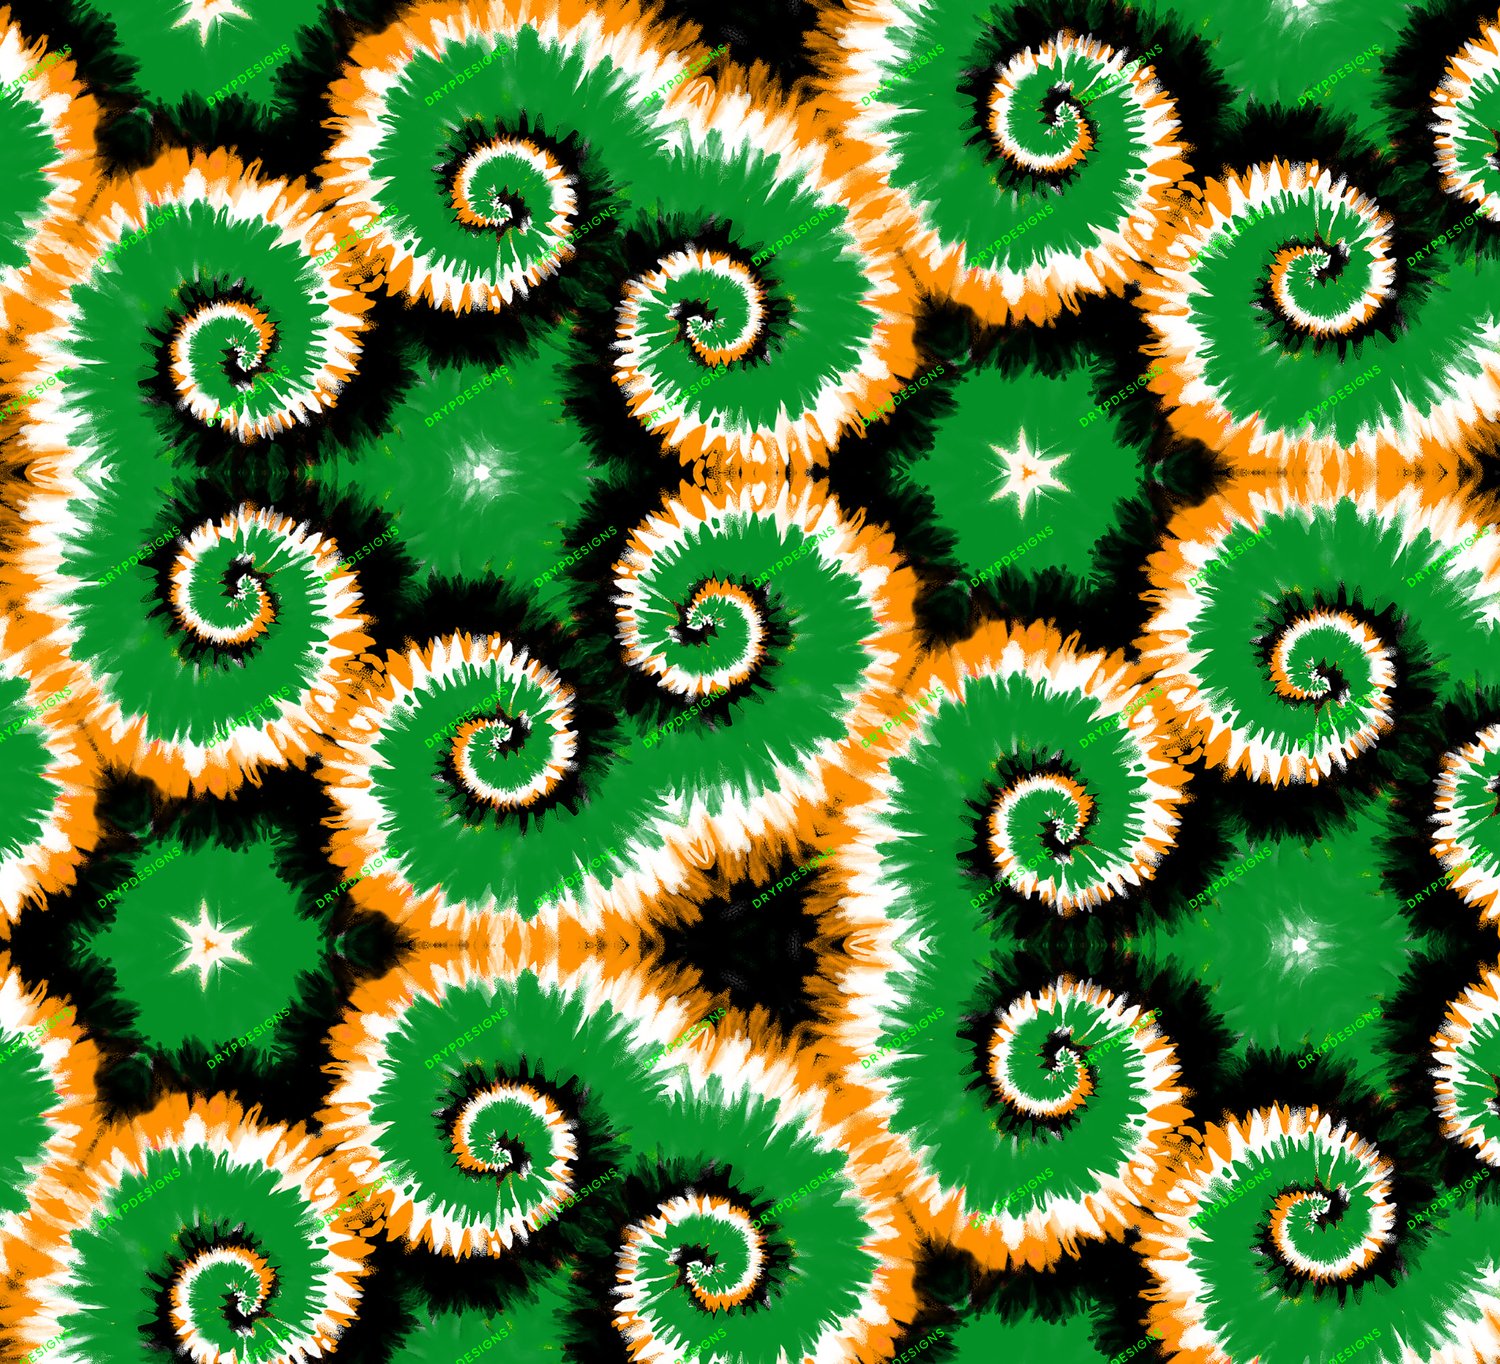 Black + Green + Golden Yellow Tiedye Swirl Seamless Pattern — drypdesigns